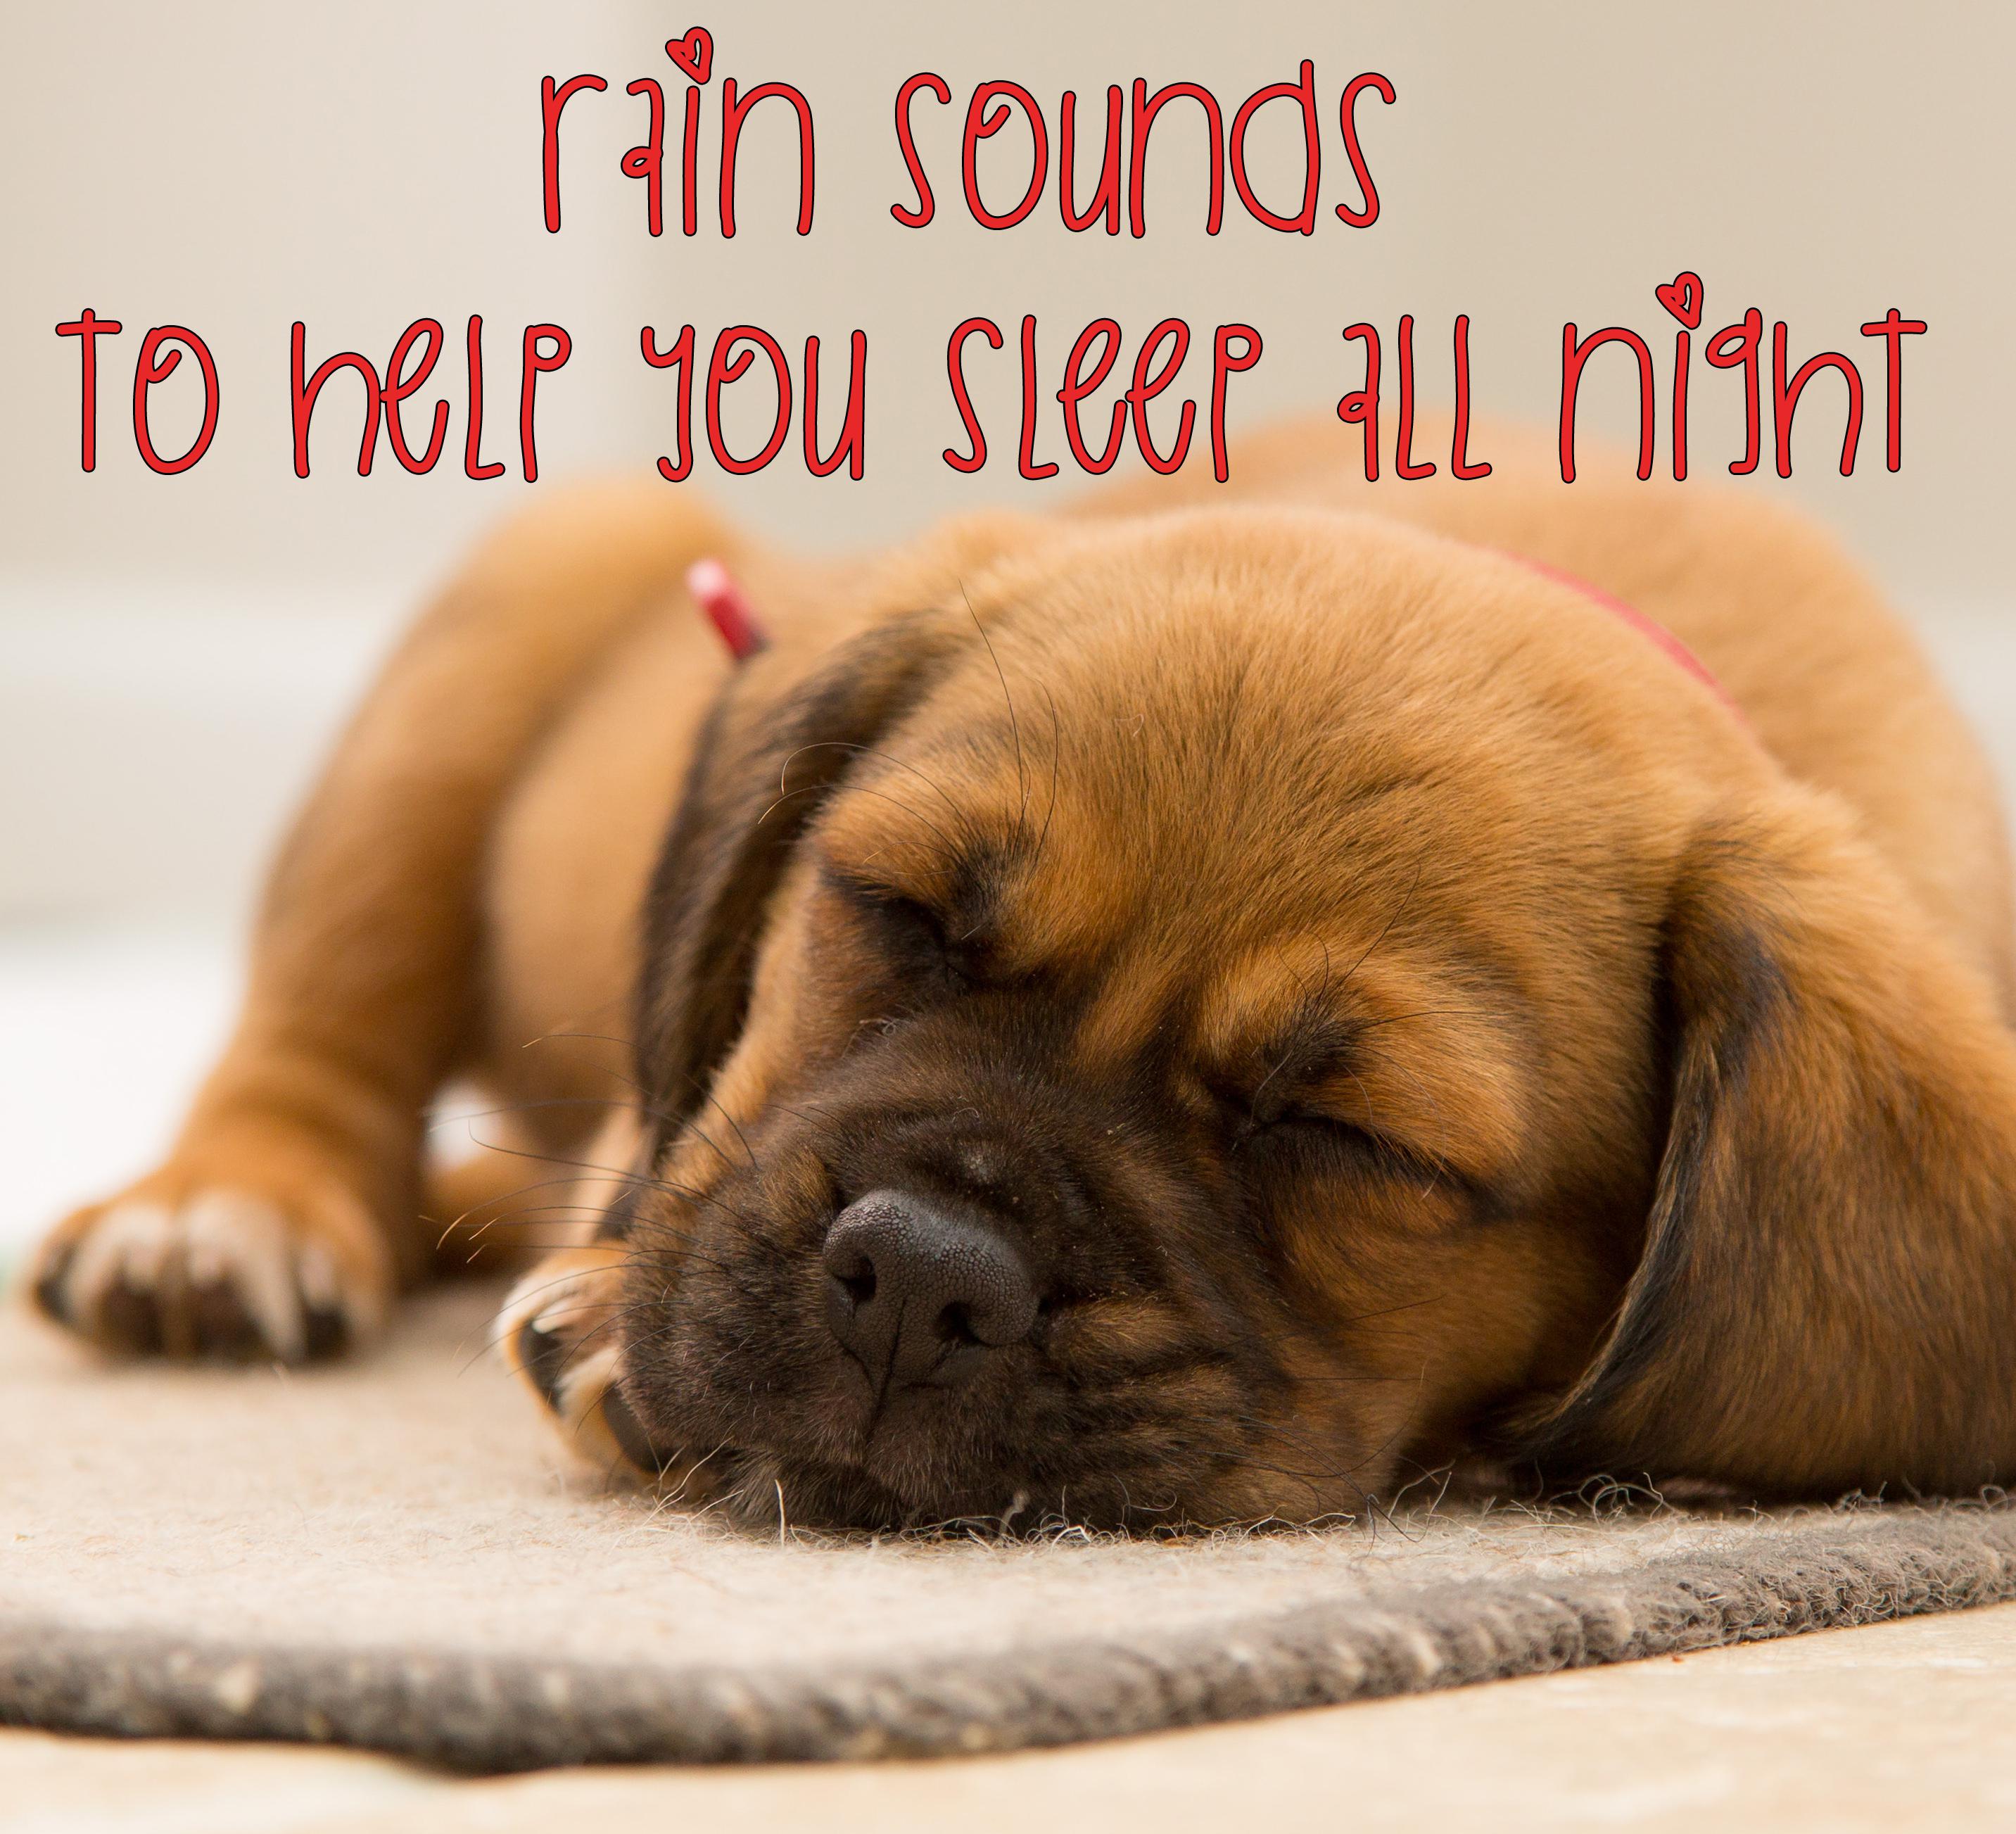 25 Rain Sleep Sounds for 8 Hours Sleep - Loopable Sounds for Sleep